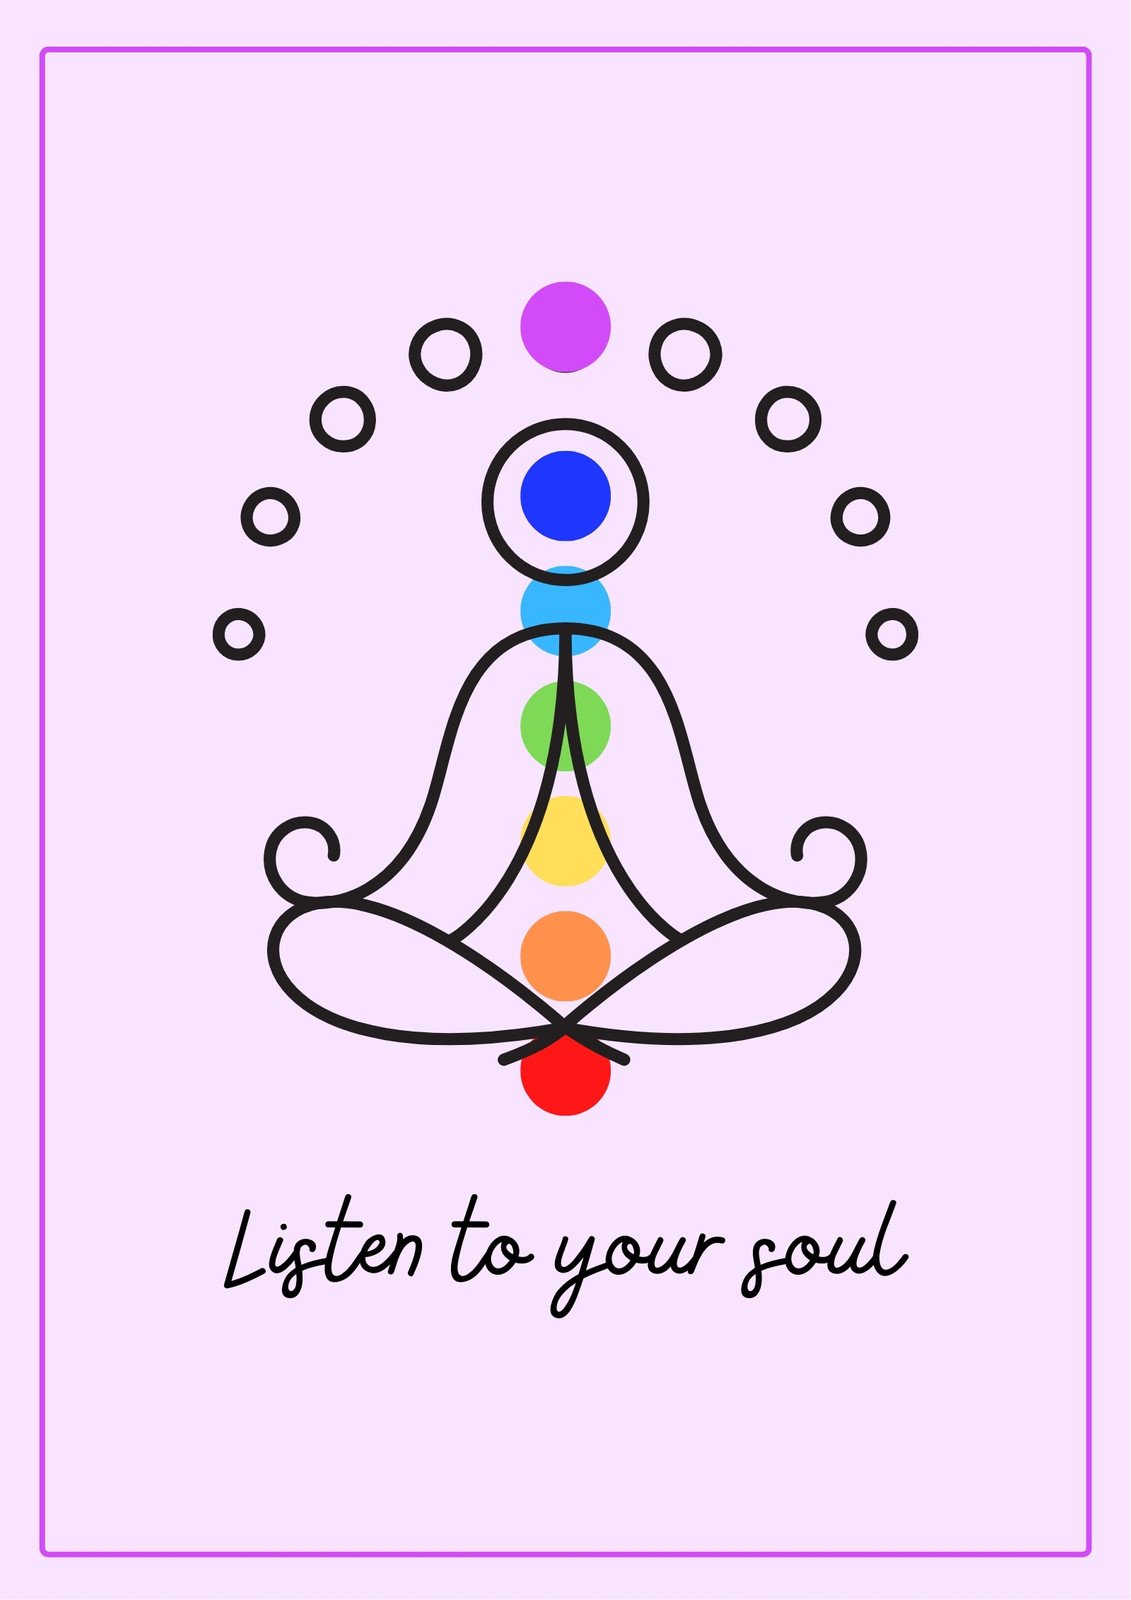 https://marketplace.canva.com/EAFN7aBezcc/1/0/1131w/canva-spirituality-yoga-poster-purple-simple-illustration-4wDlJBVaE0I.jpg